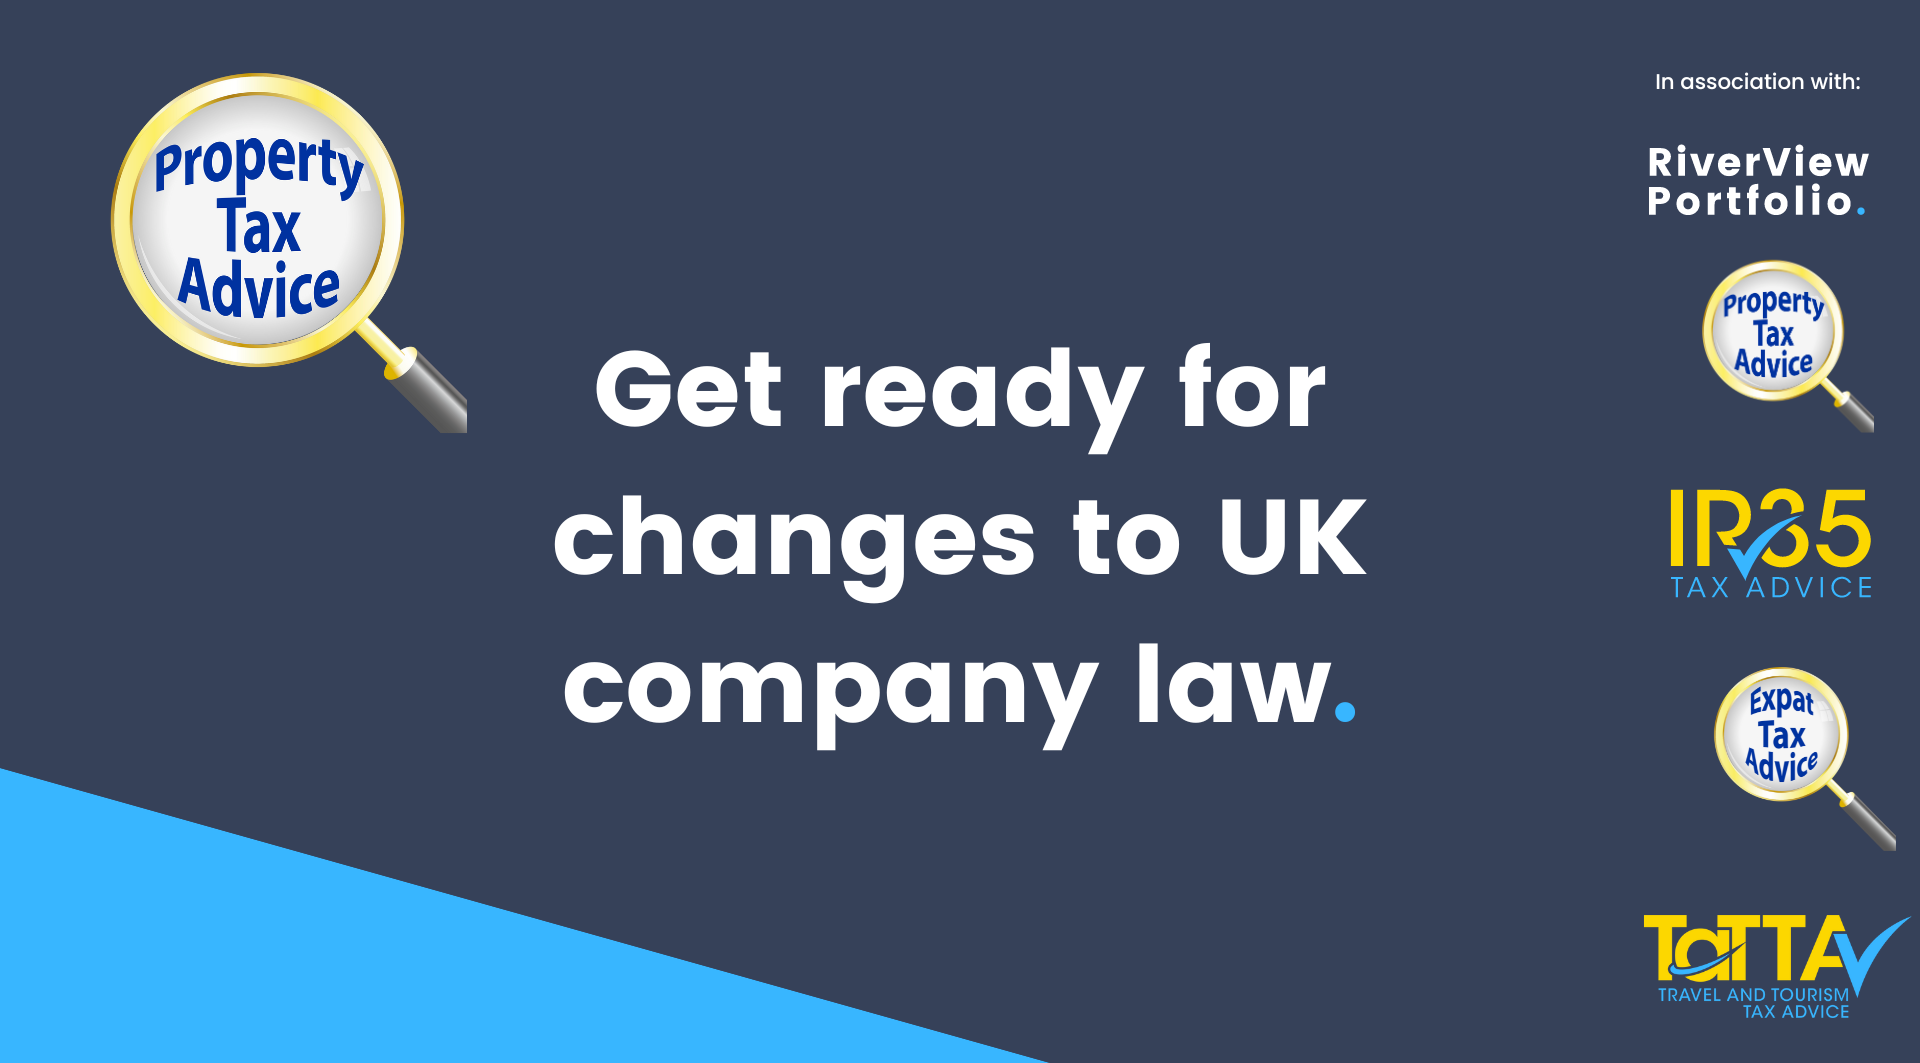 uk company law changes, uk company law